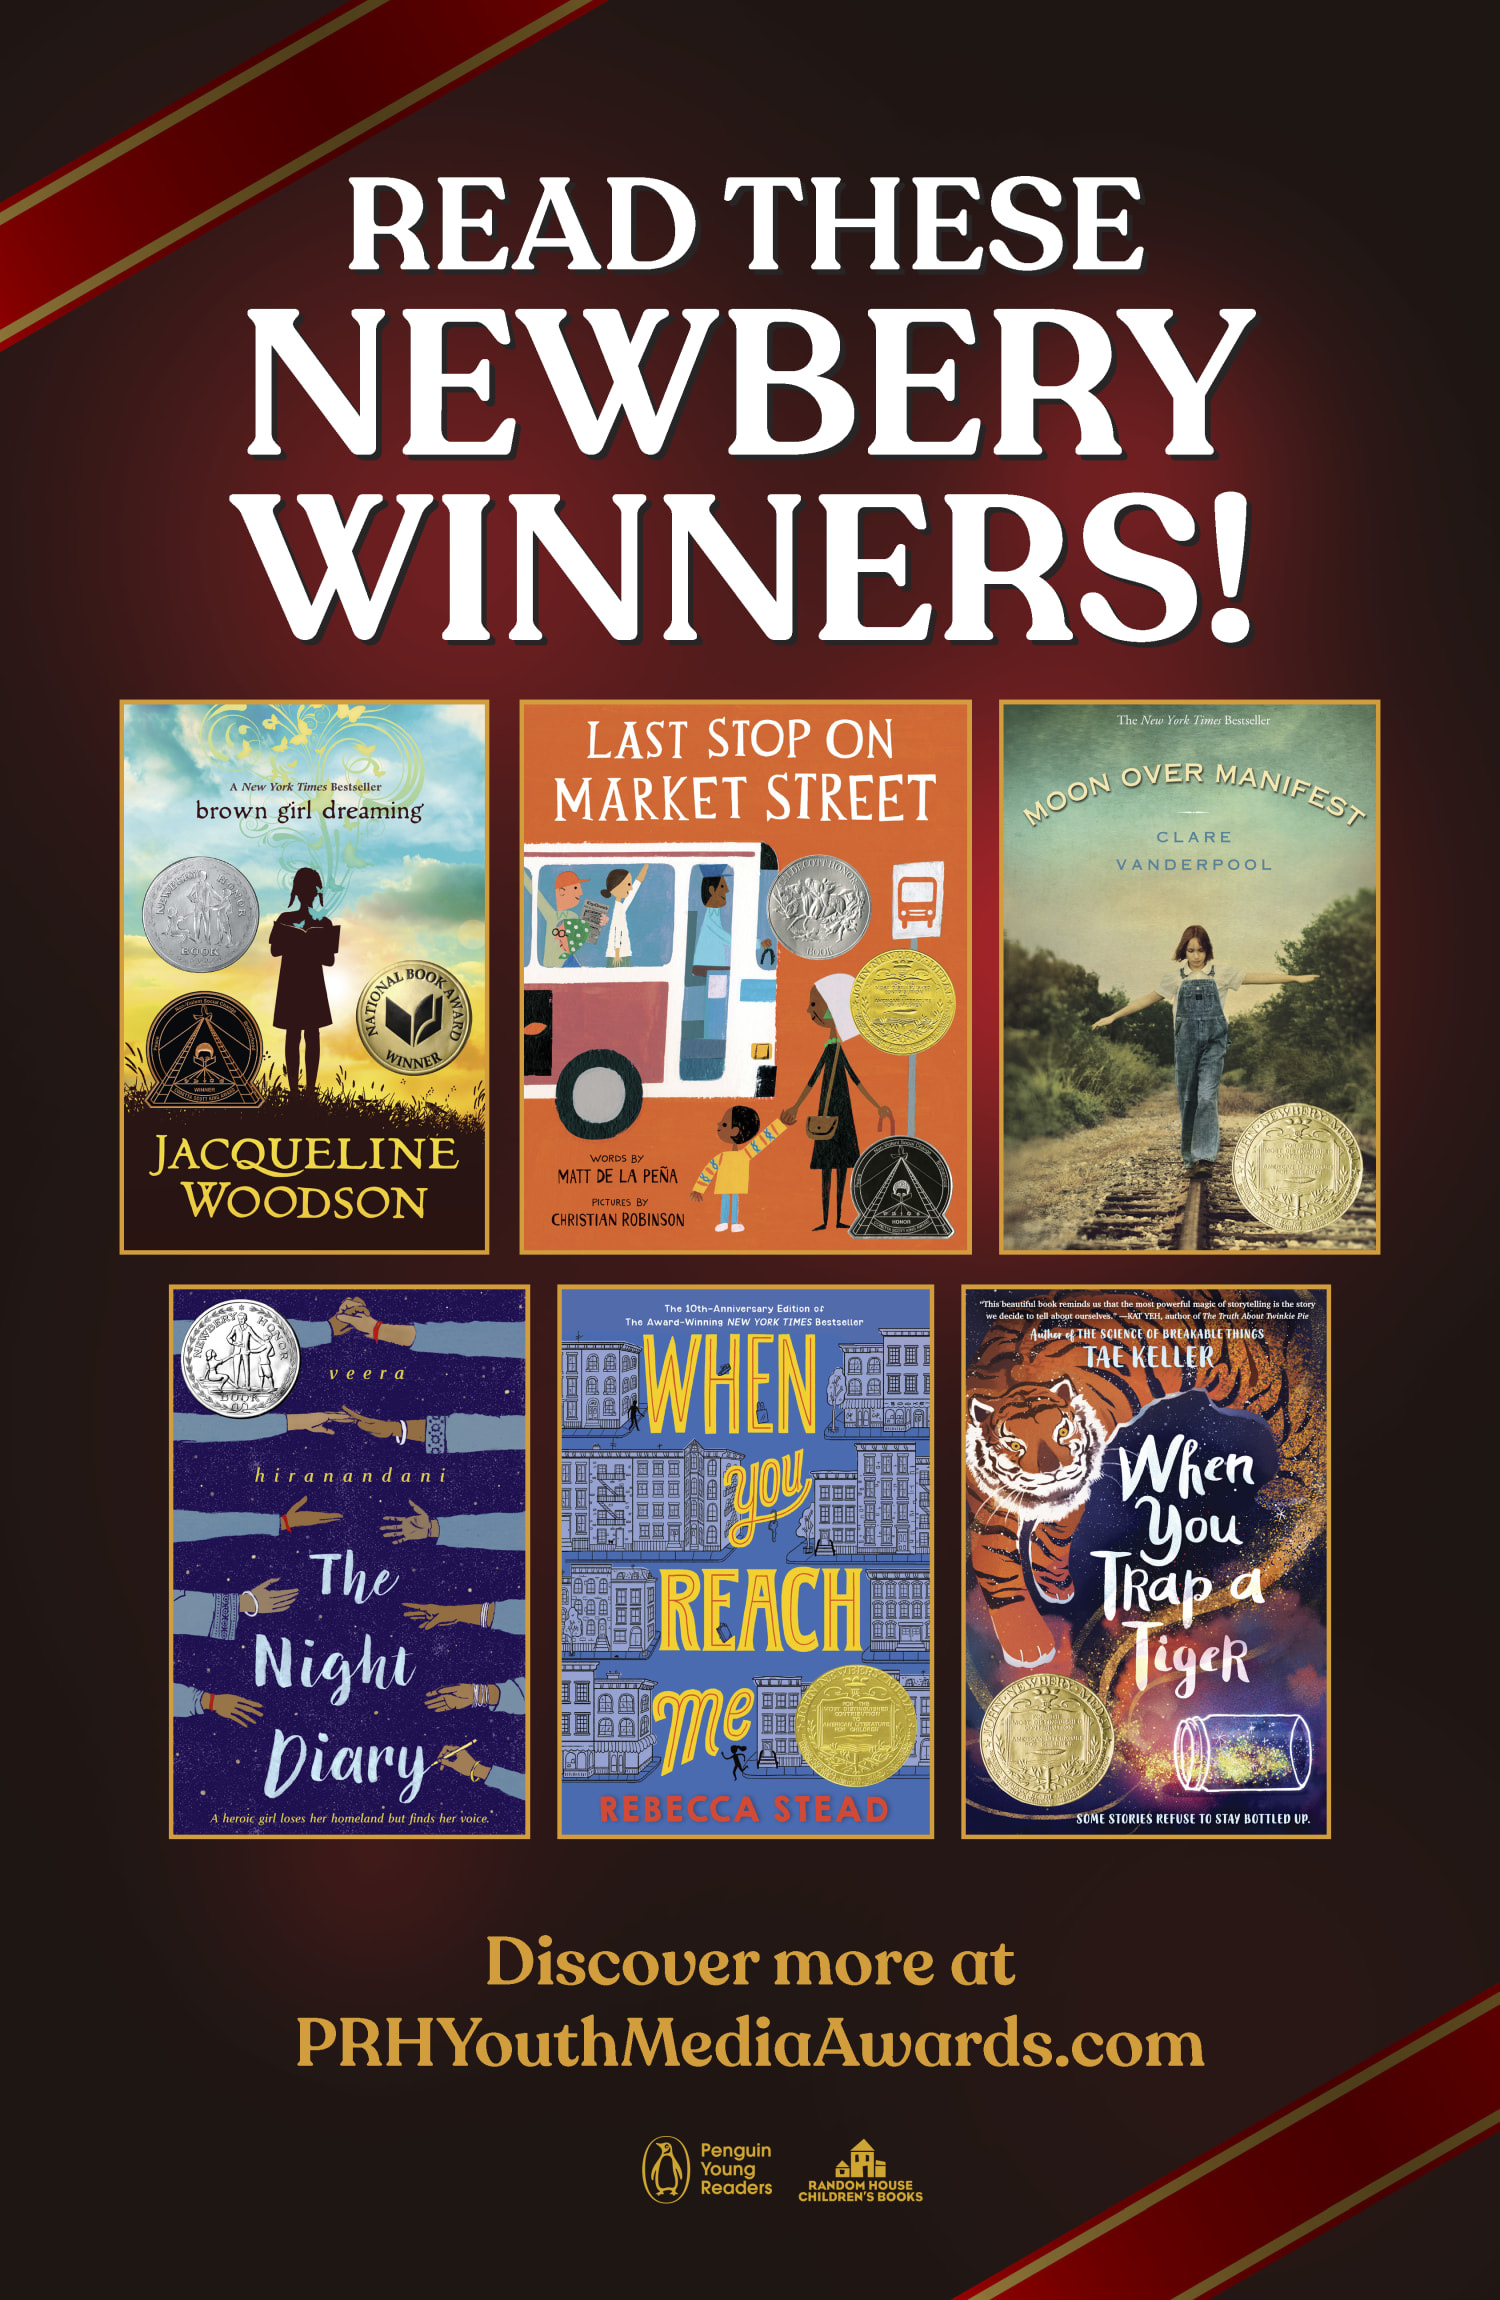 Discover ALA AwardWinners! Penguin Random House